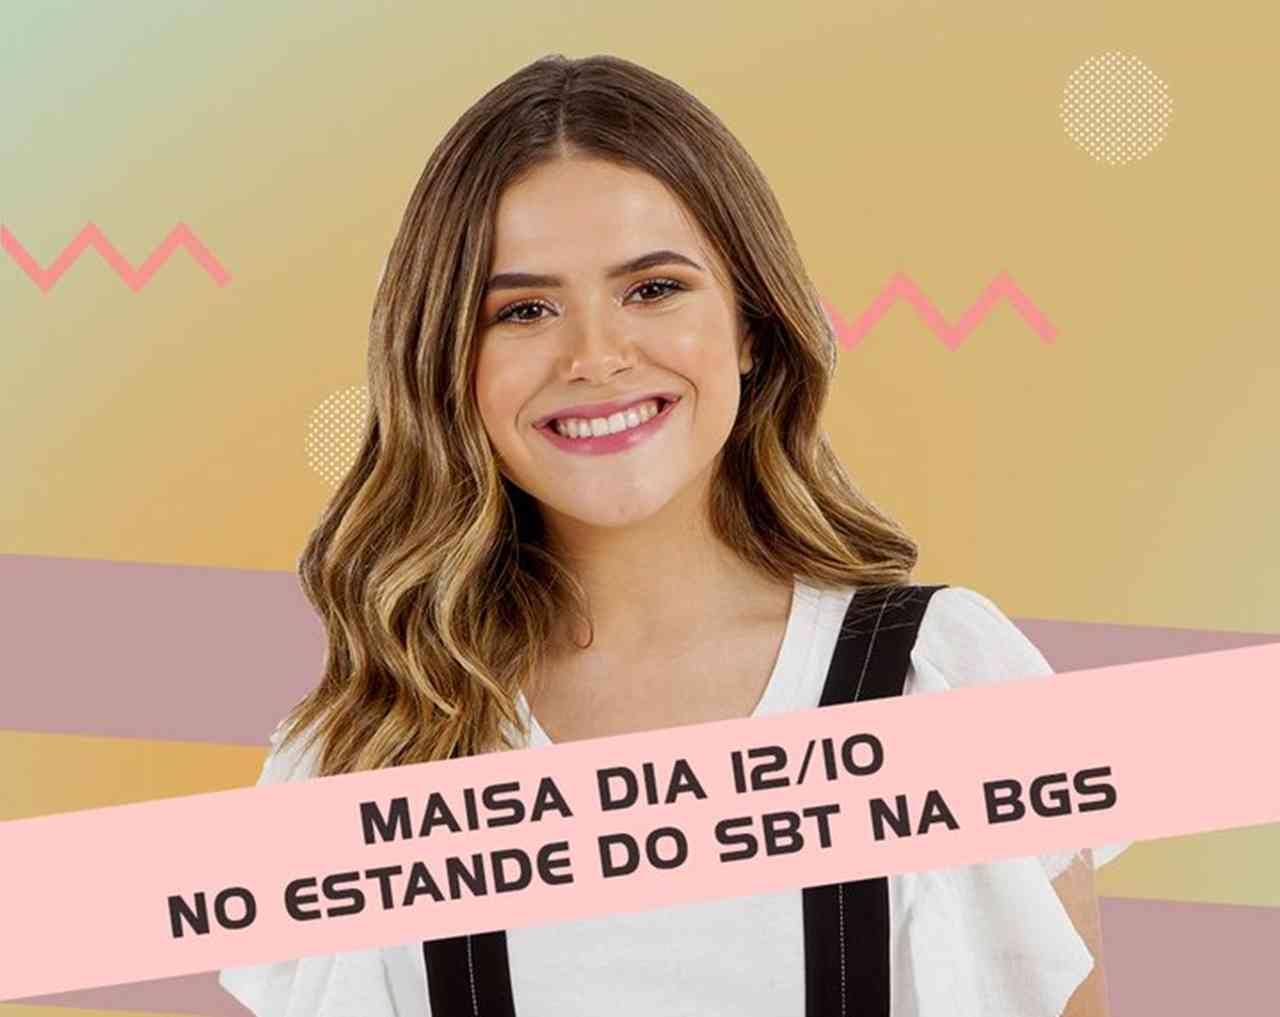 BGS 2019 | Maísa estará presente no evento 1